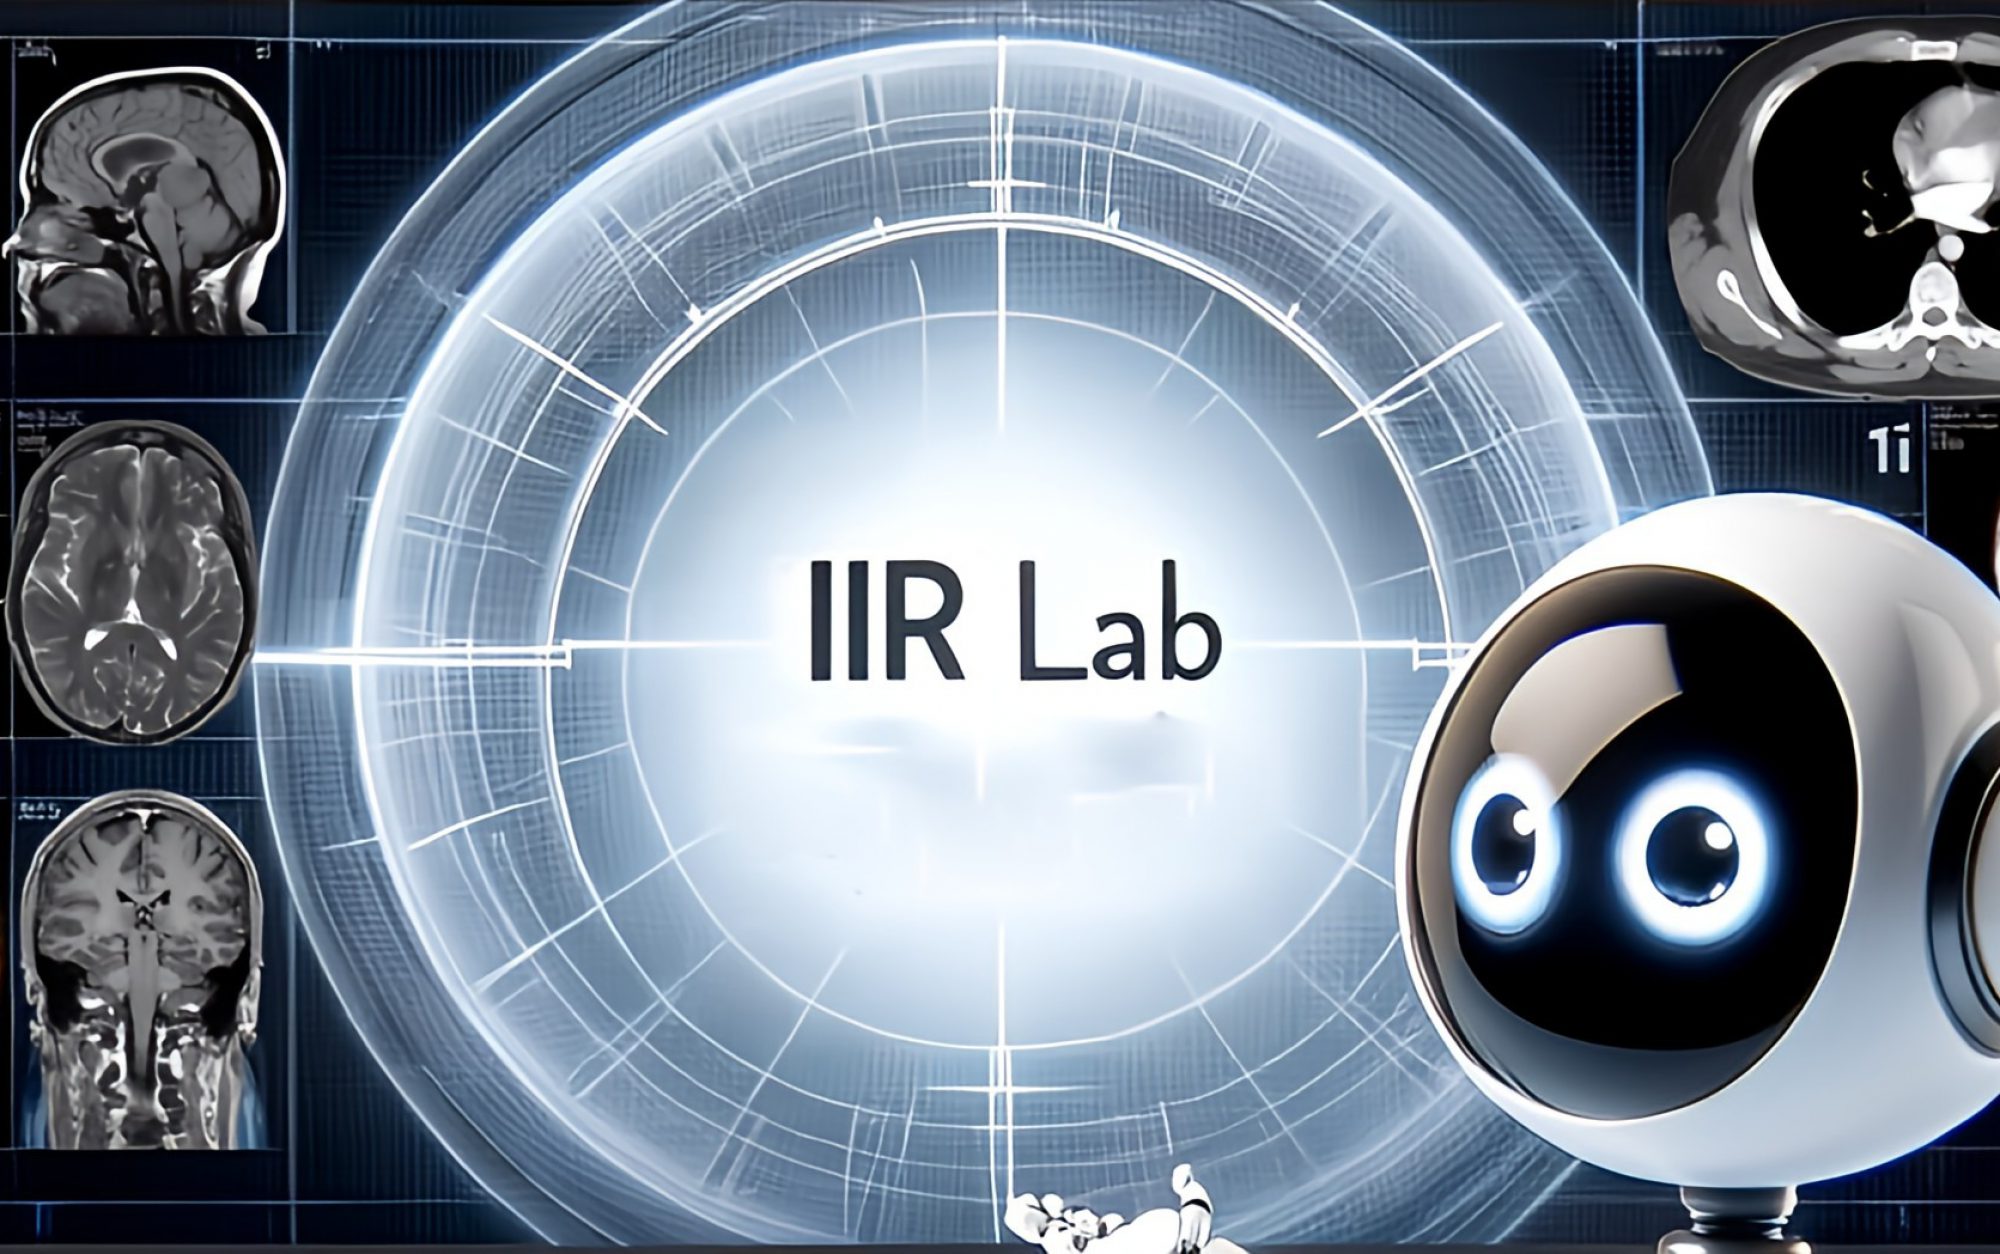 IIR lab